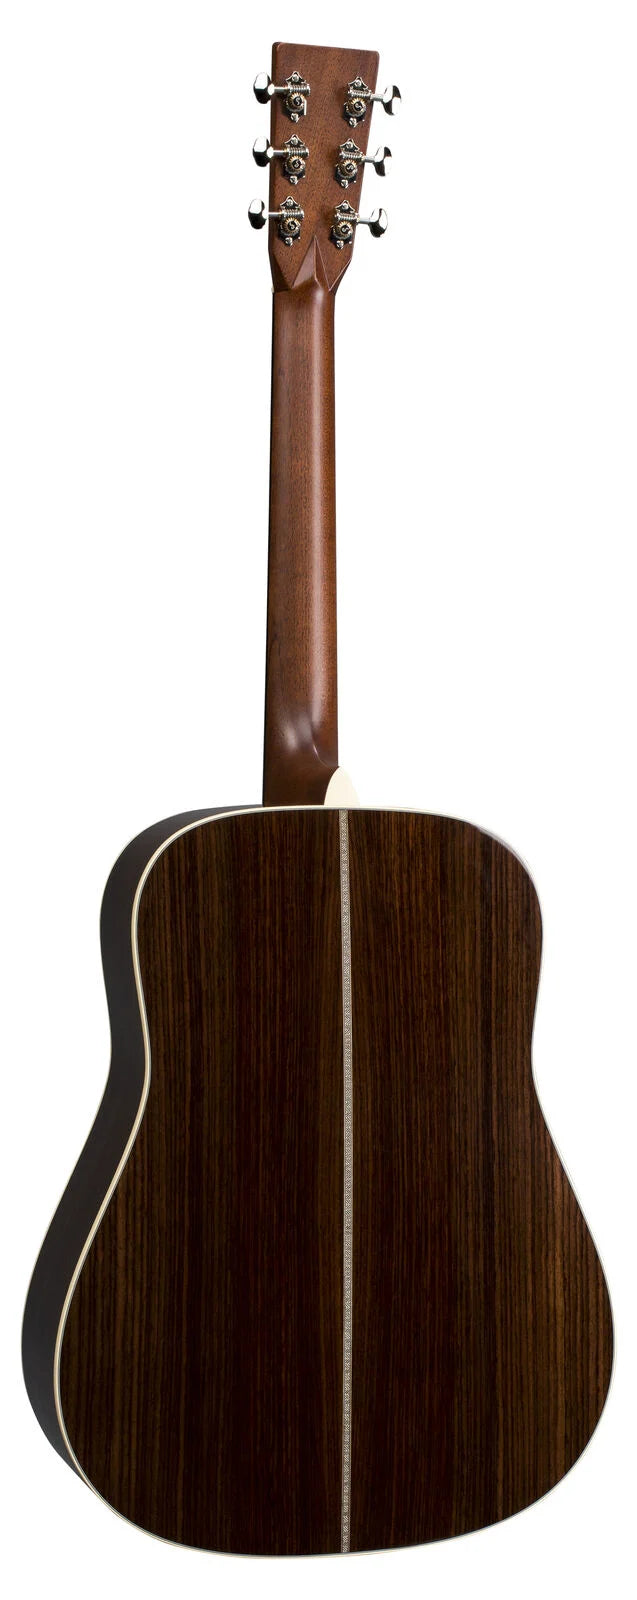 Martin HD28 Herringbone Acoustic Guitar with Molded Hardshell Case